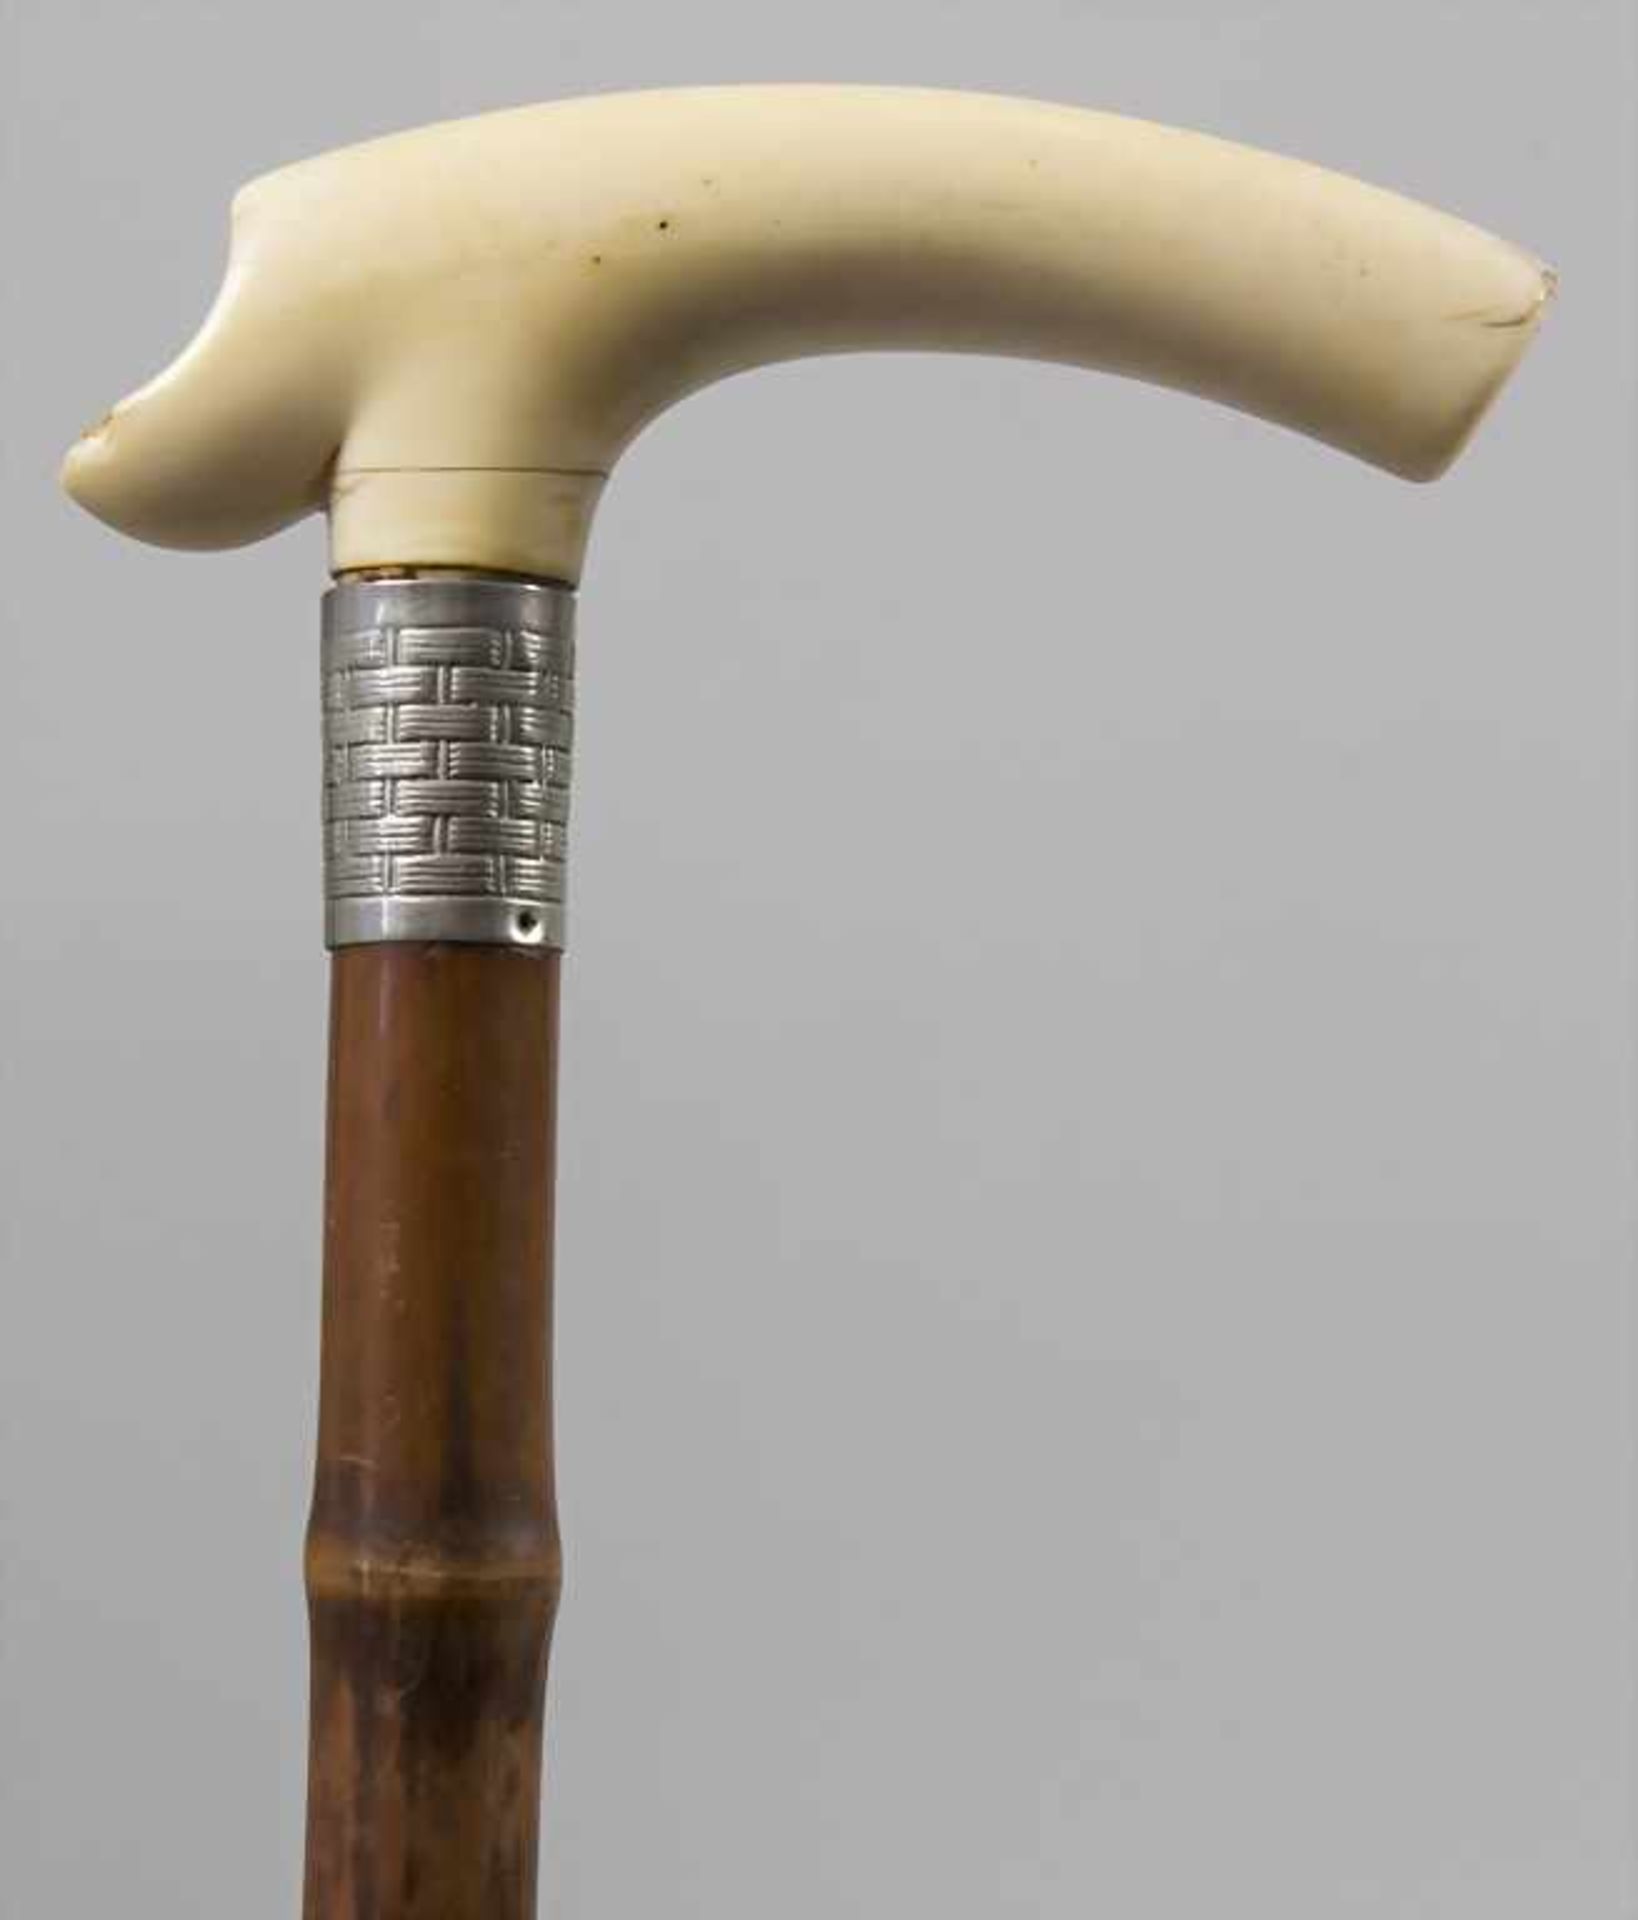 Sammlung 10 Gehstöcke / A collection of 10 canes with ivory handle - Bild 11 aus 27